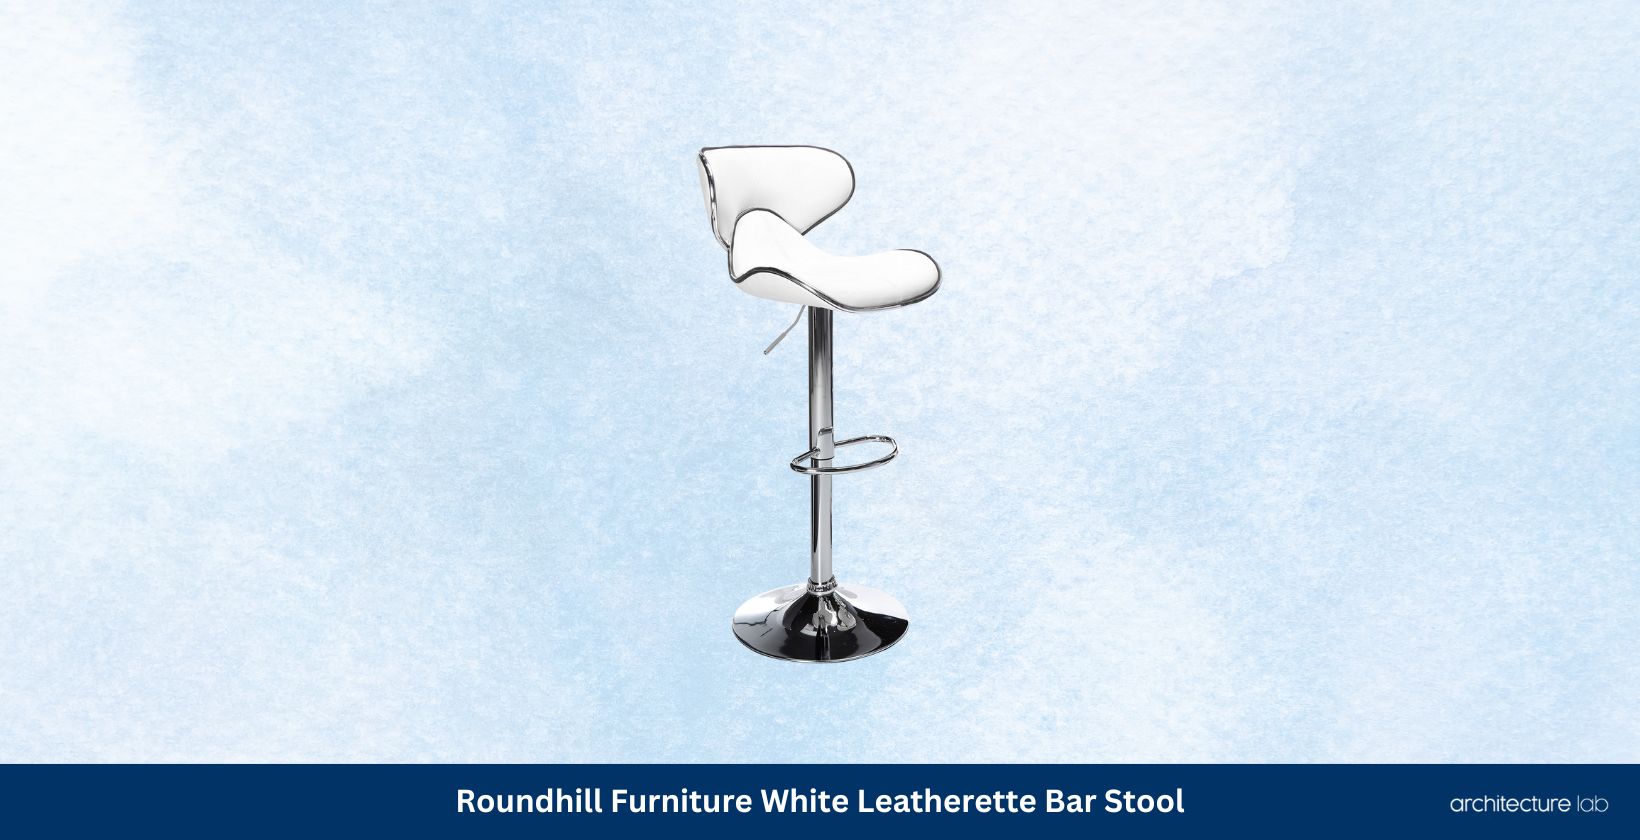 Roundhill furniture white leatherette bar stool